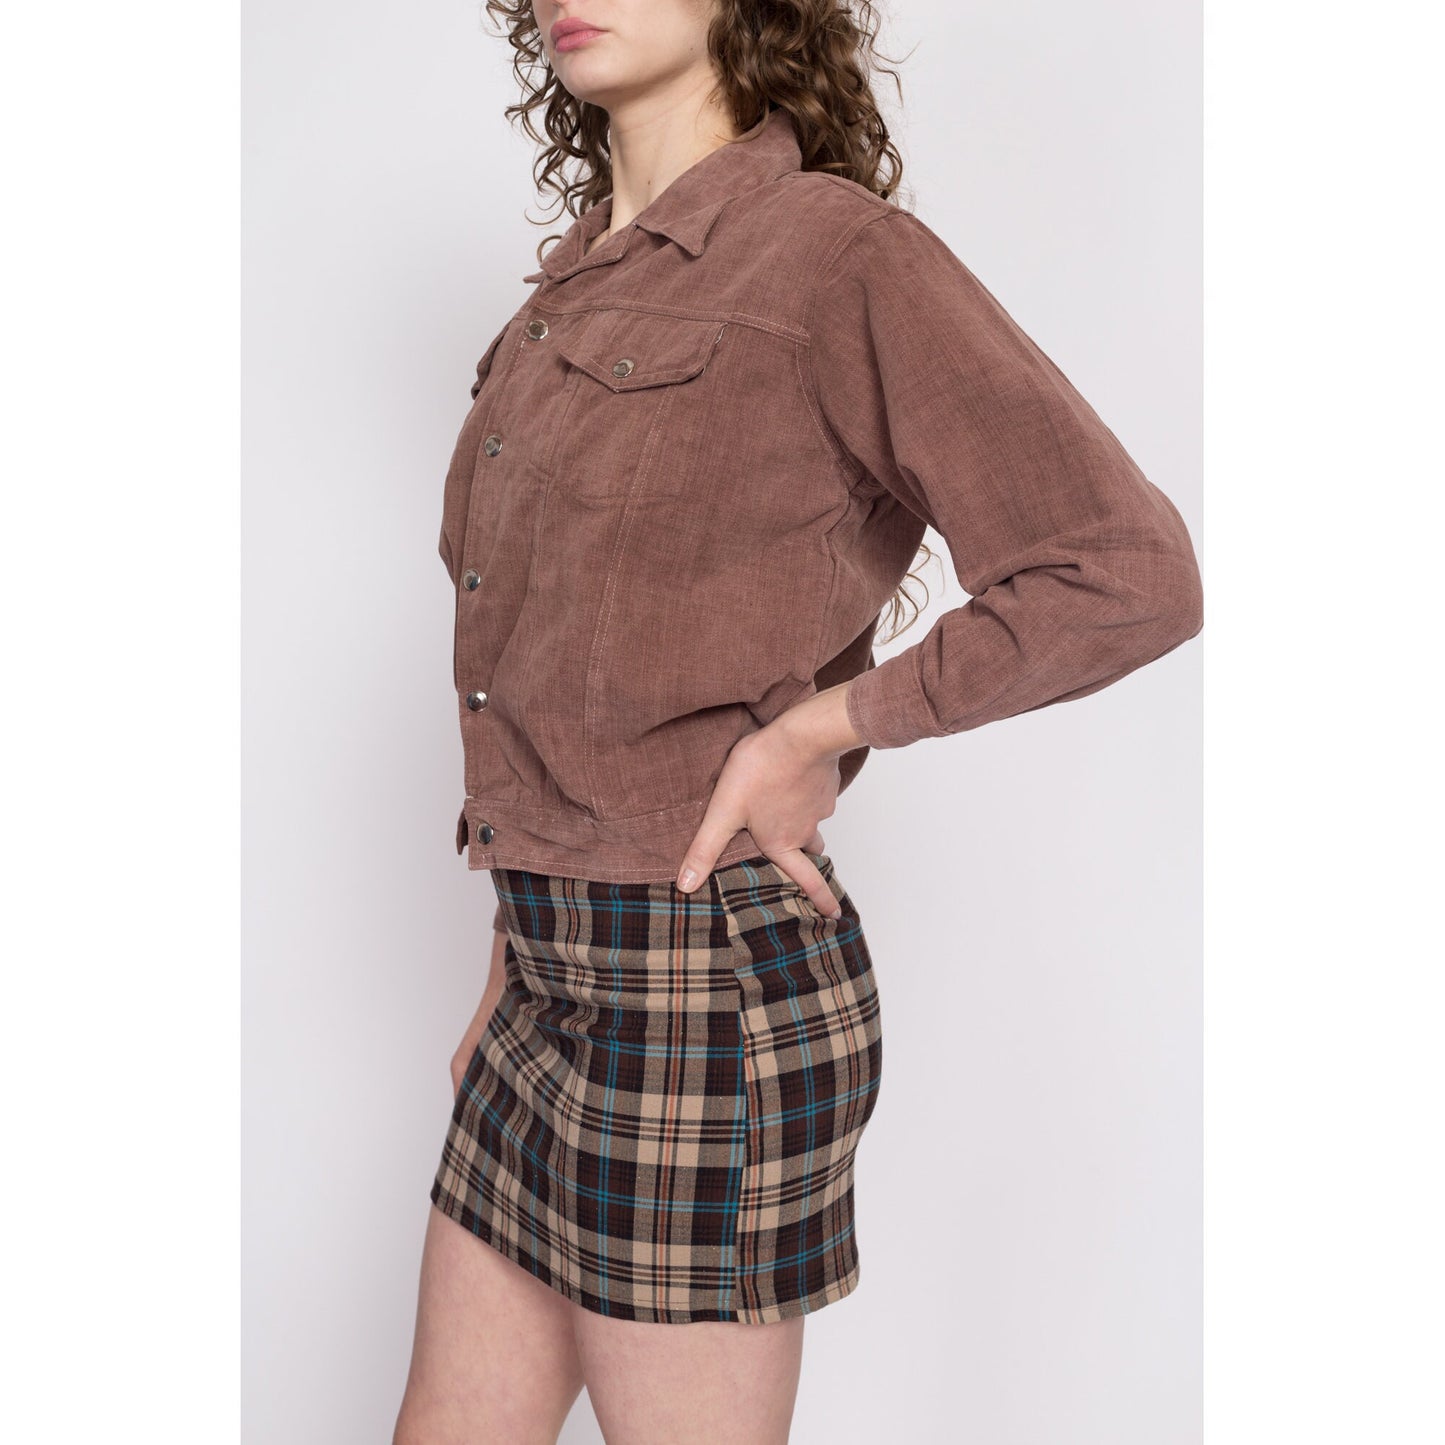 70s Brown Soft Cotton Denim Jacket - Men's Medium Short, Women's Large | Vintage Boho Lightweight Cropped Jean Jacket